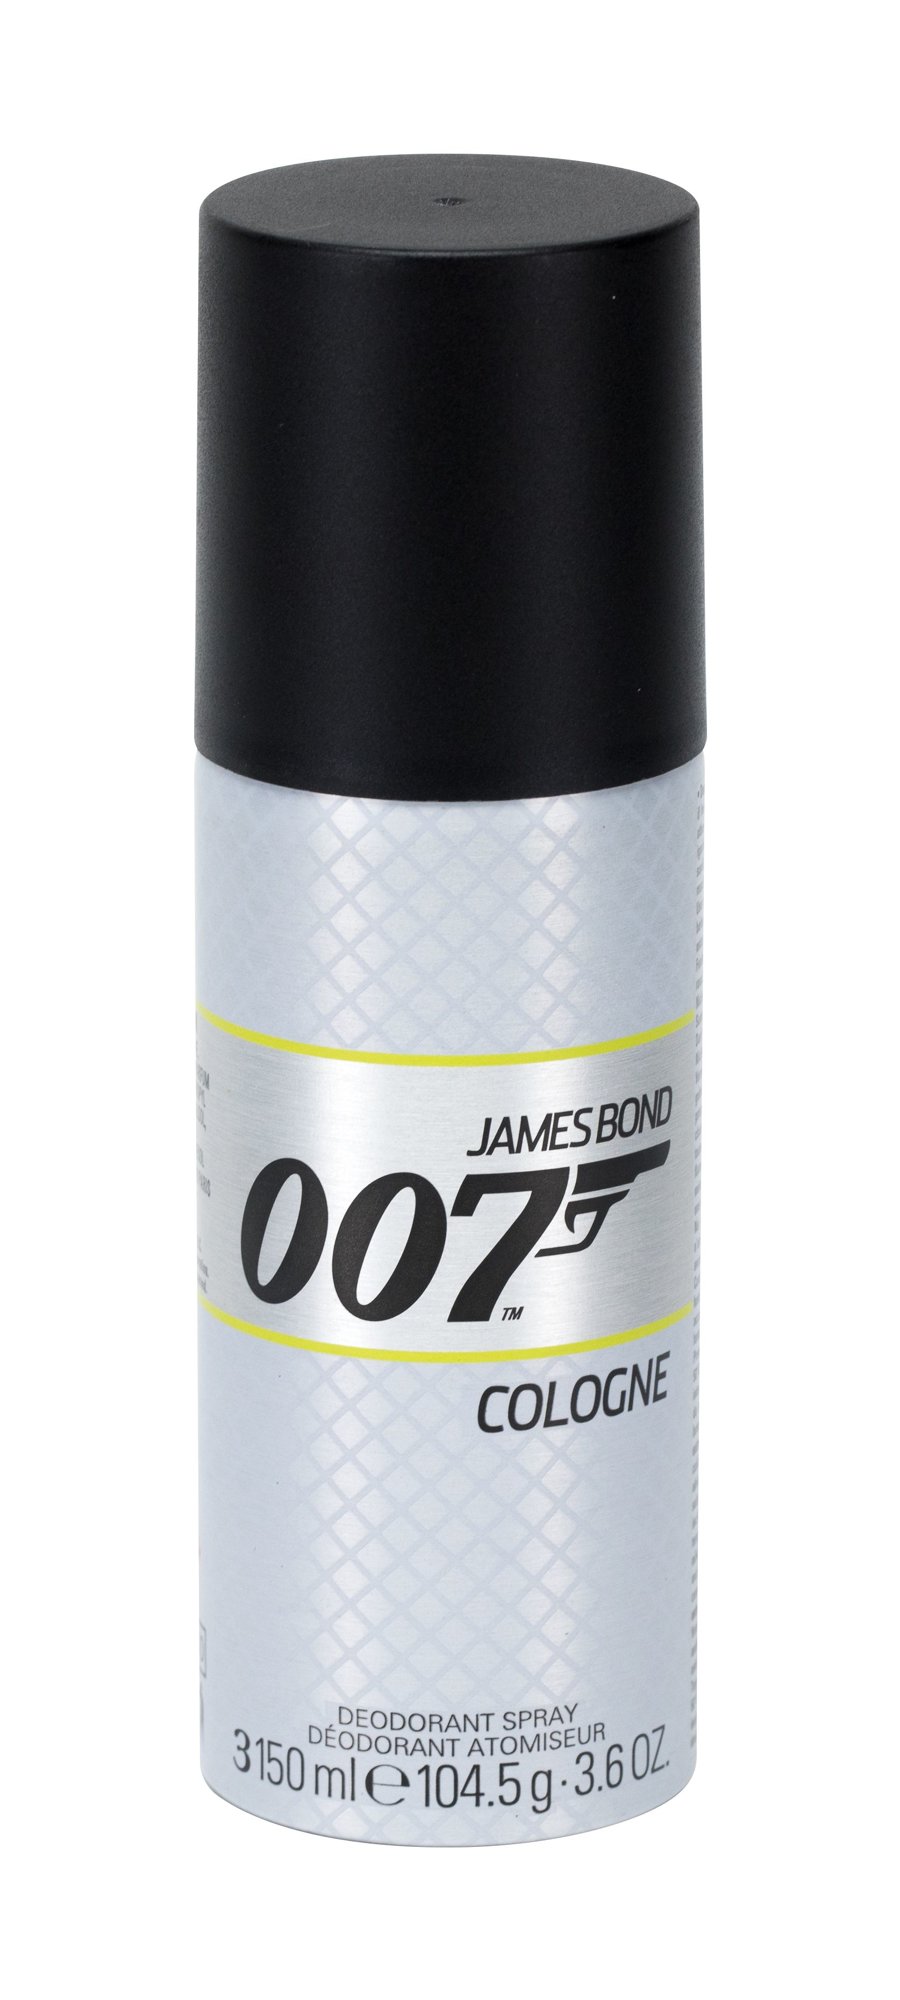 James Bond 007 James Bond 007 Cologne dezodorantas